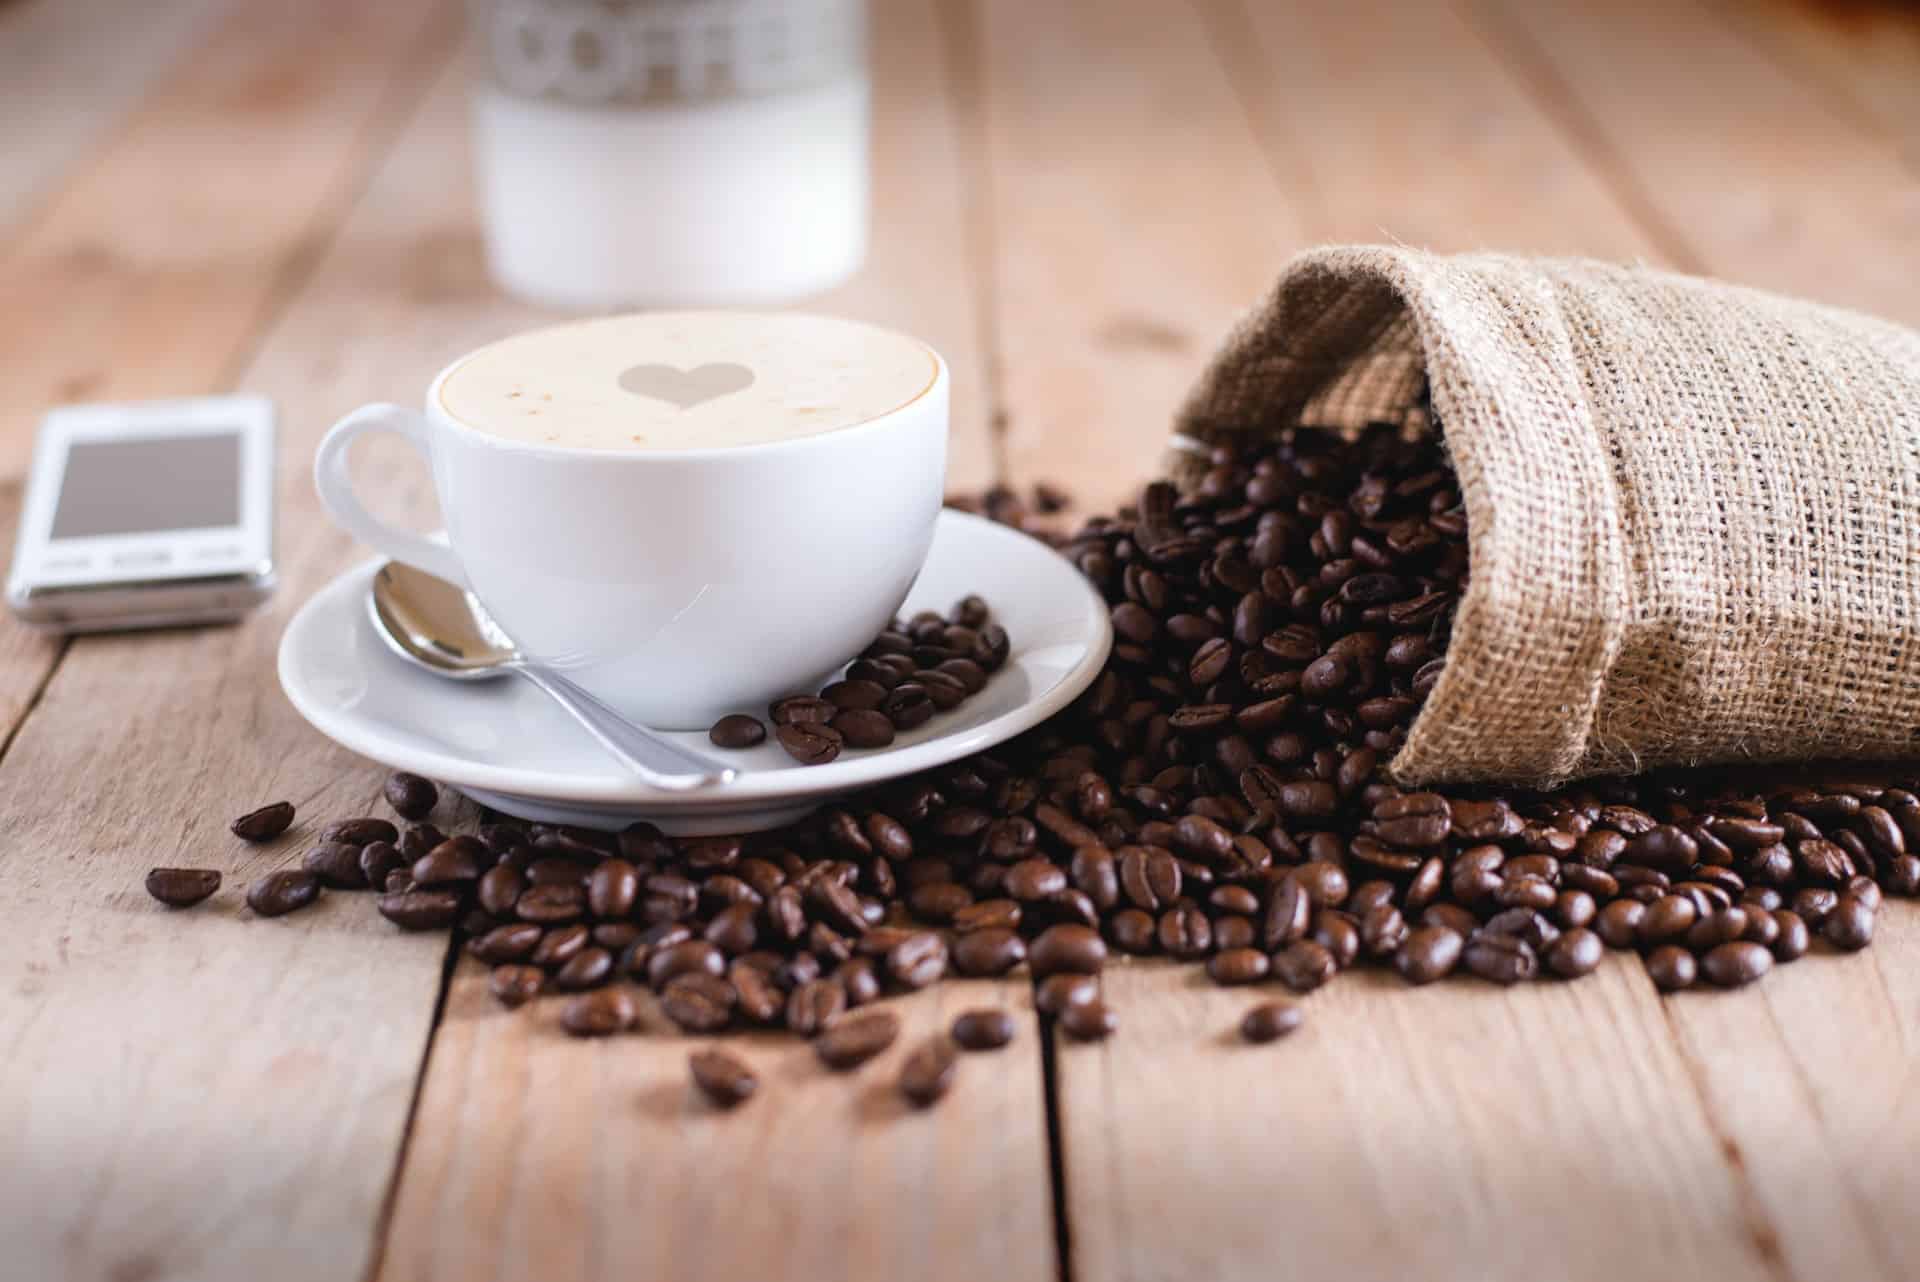 Jak proces wypalania kształtuje smak kawy?